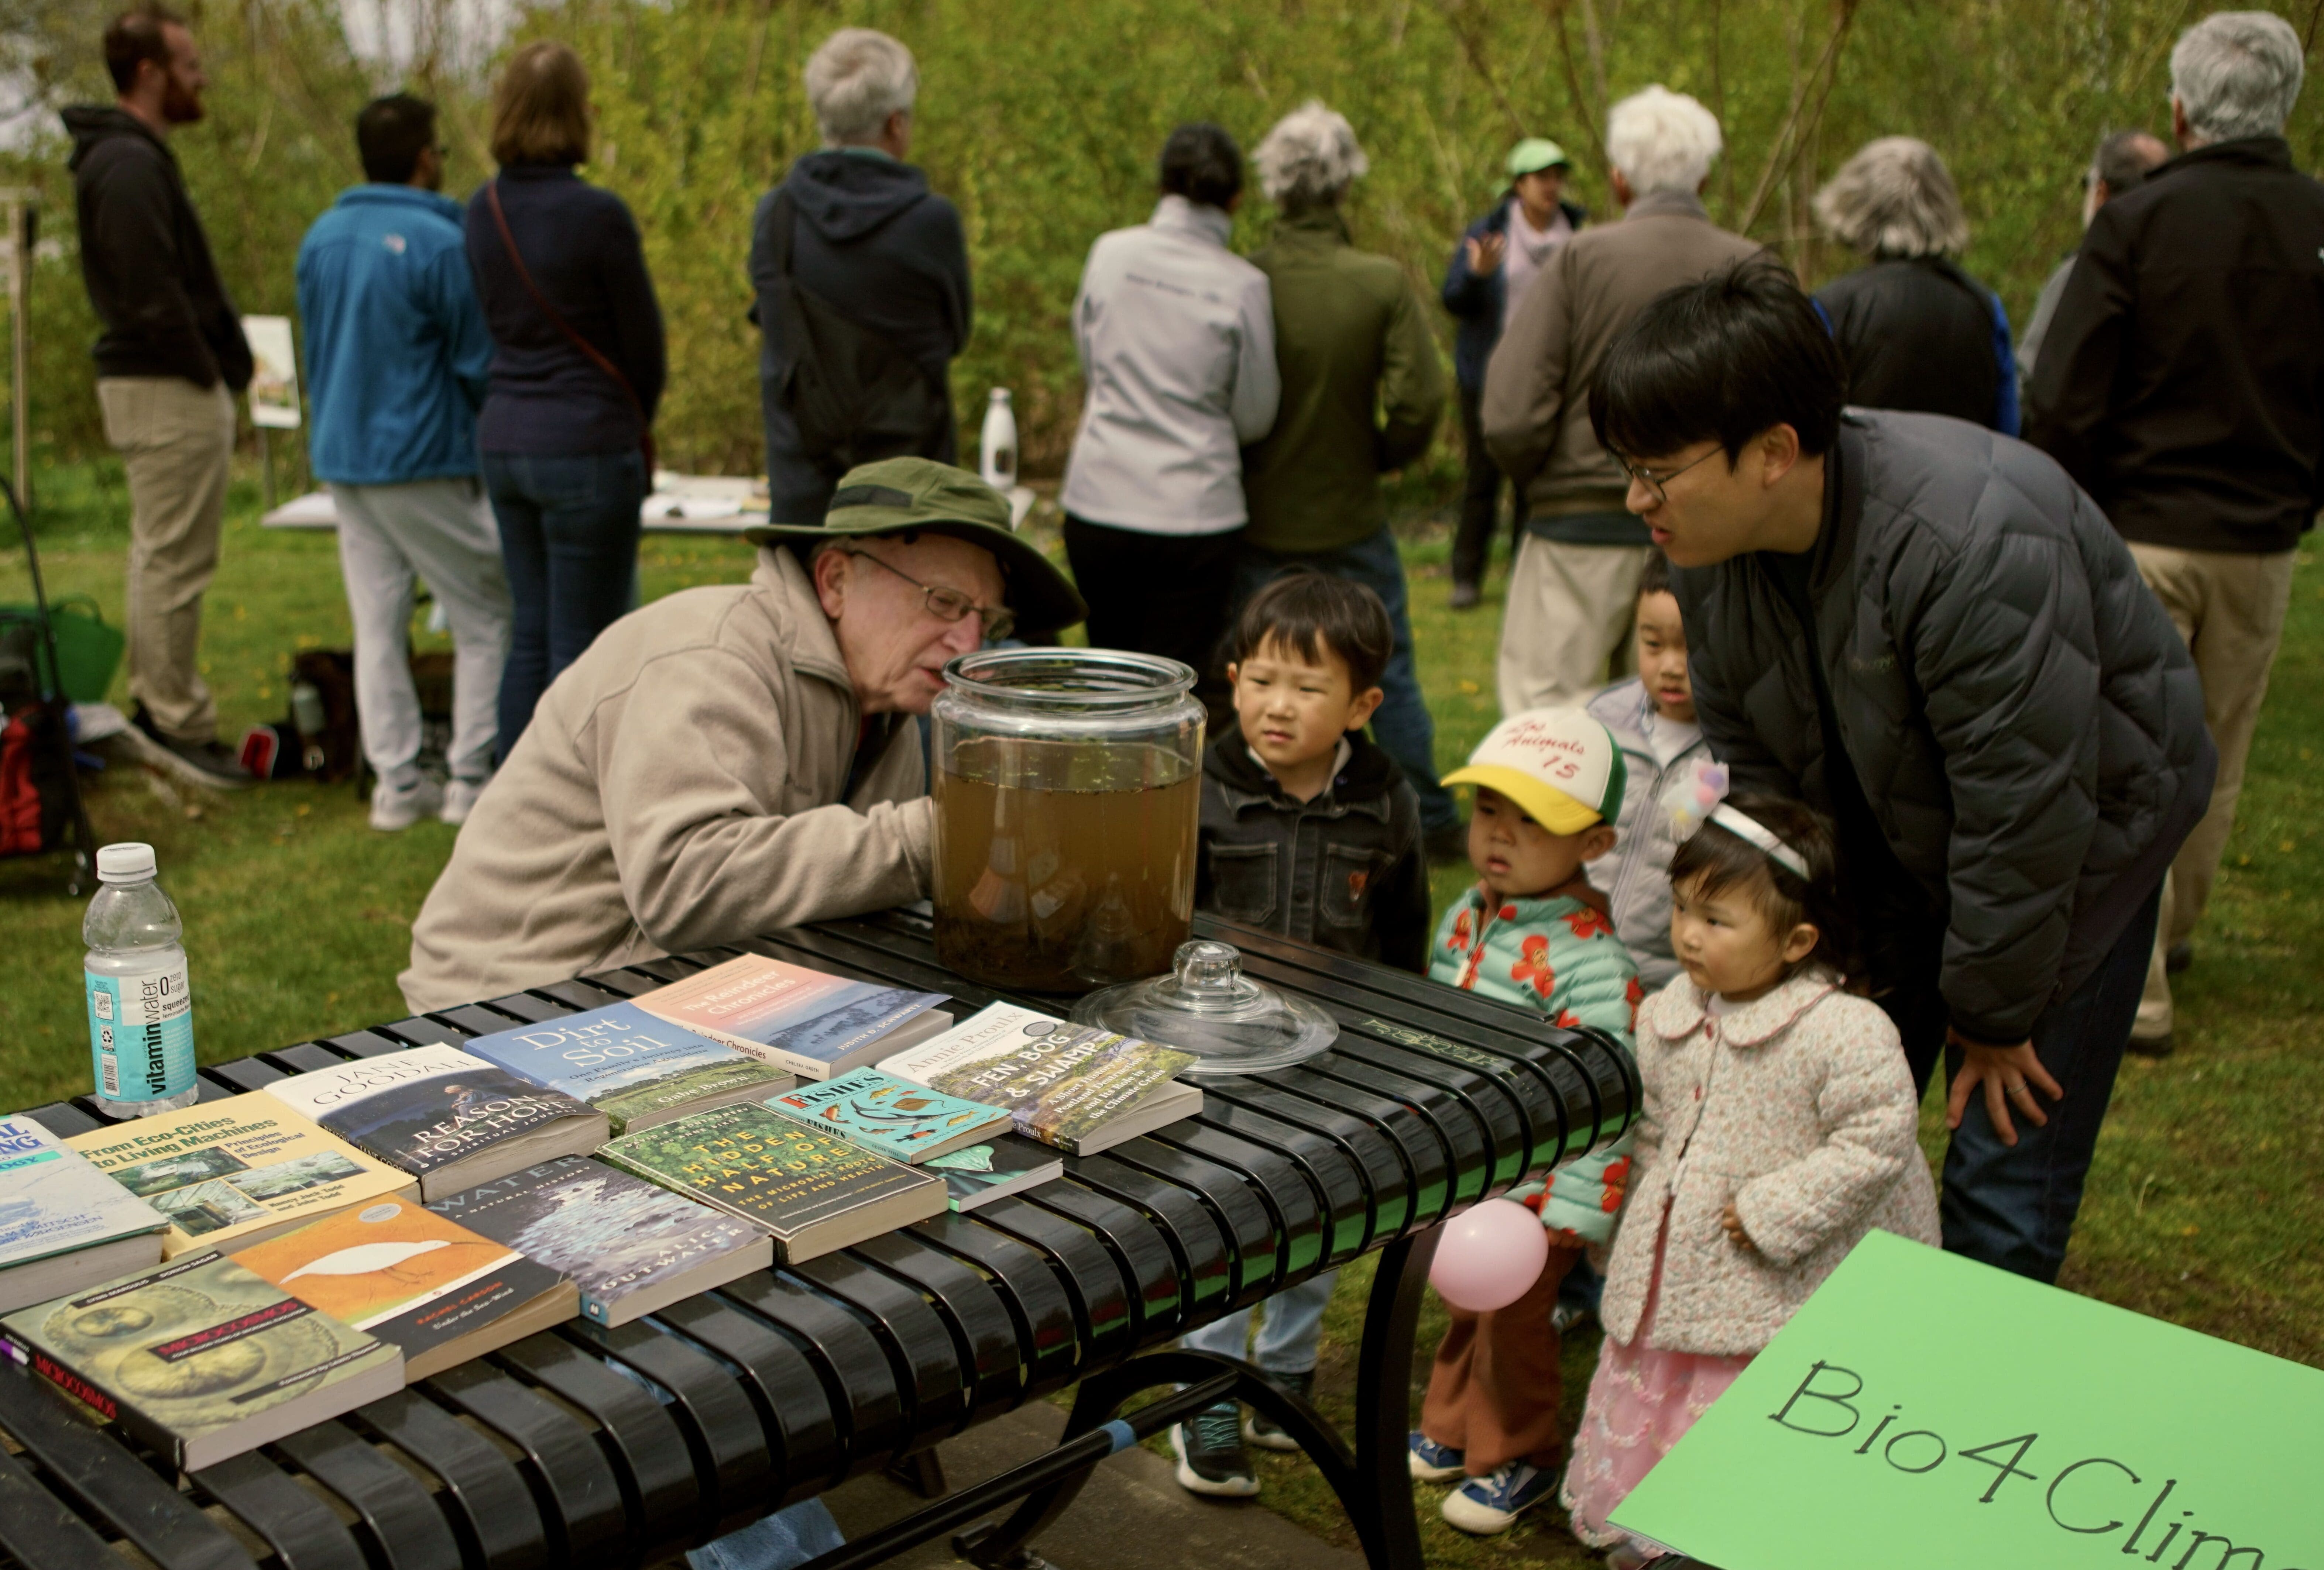 Biodiversity Day: A Community Celebration